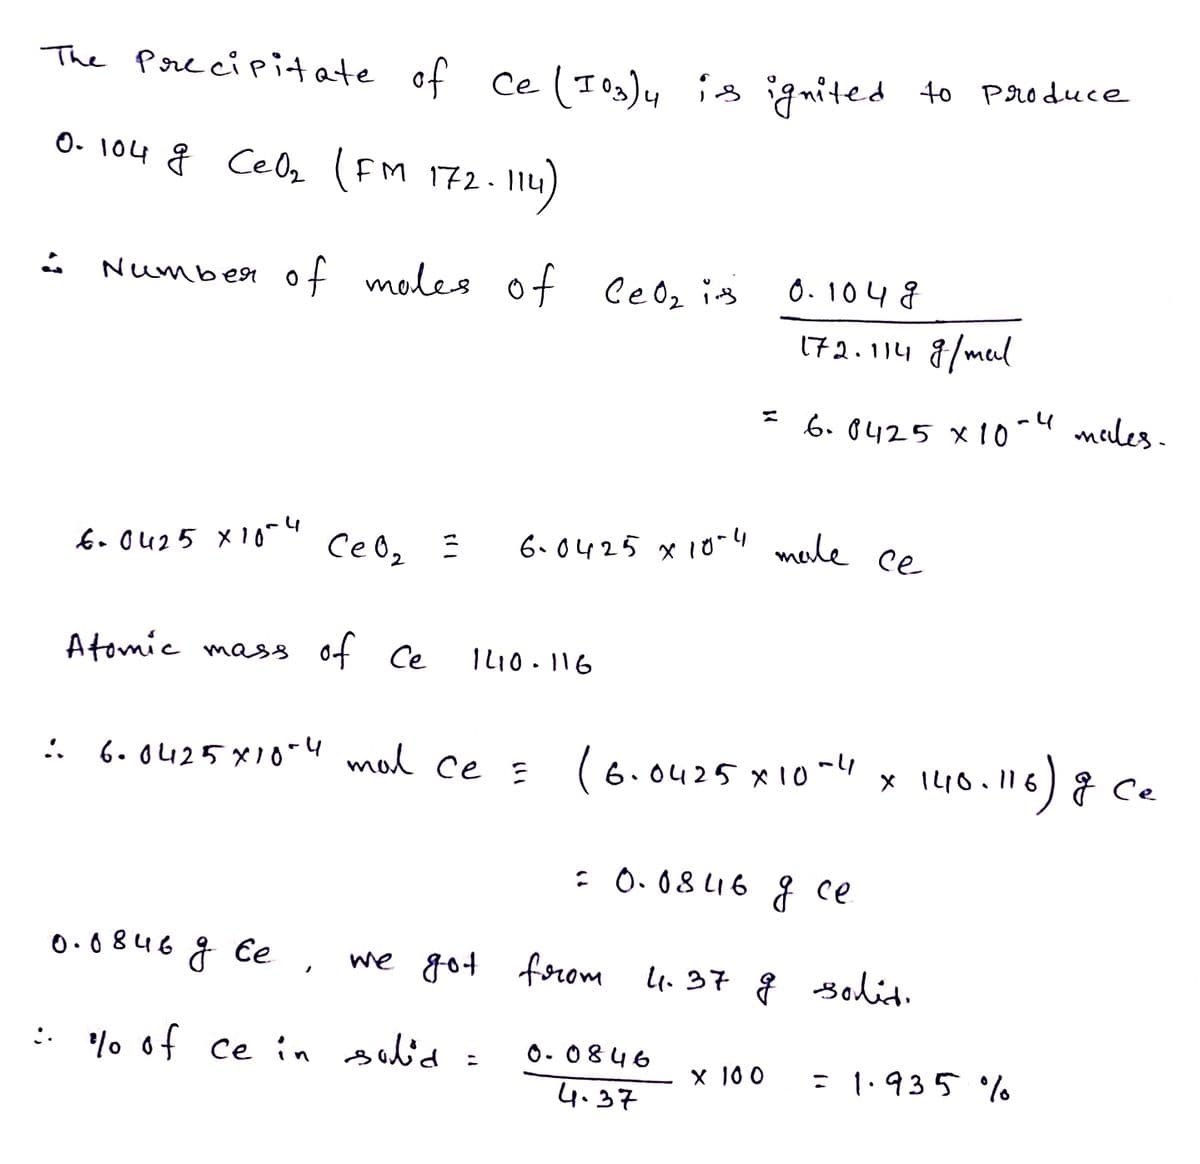 The Porecipitate of ce( Iog)y i ignited 40 Produce
4
O- 104 g Celz (FM 172.11y
Number of moles of CeOz ins
0. 104 8
172.114 8/mul
* 6. 8425 x10-4 meles.
6. O425 x10"4
CeOz
6.0425 x10-" male ce
Atomic mass of Ce
ILI0. 116
6.0425X10-u mal ce =
(6.0425 x10ml4
x IL10.116) ce
: O. 08 LI6 { ce
0.0846 g Ce ,
we got
forom 4.37 g solid.
: % of ce in sid:
O- 0846
= 1.935 o
X 100
4.37
